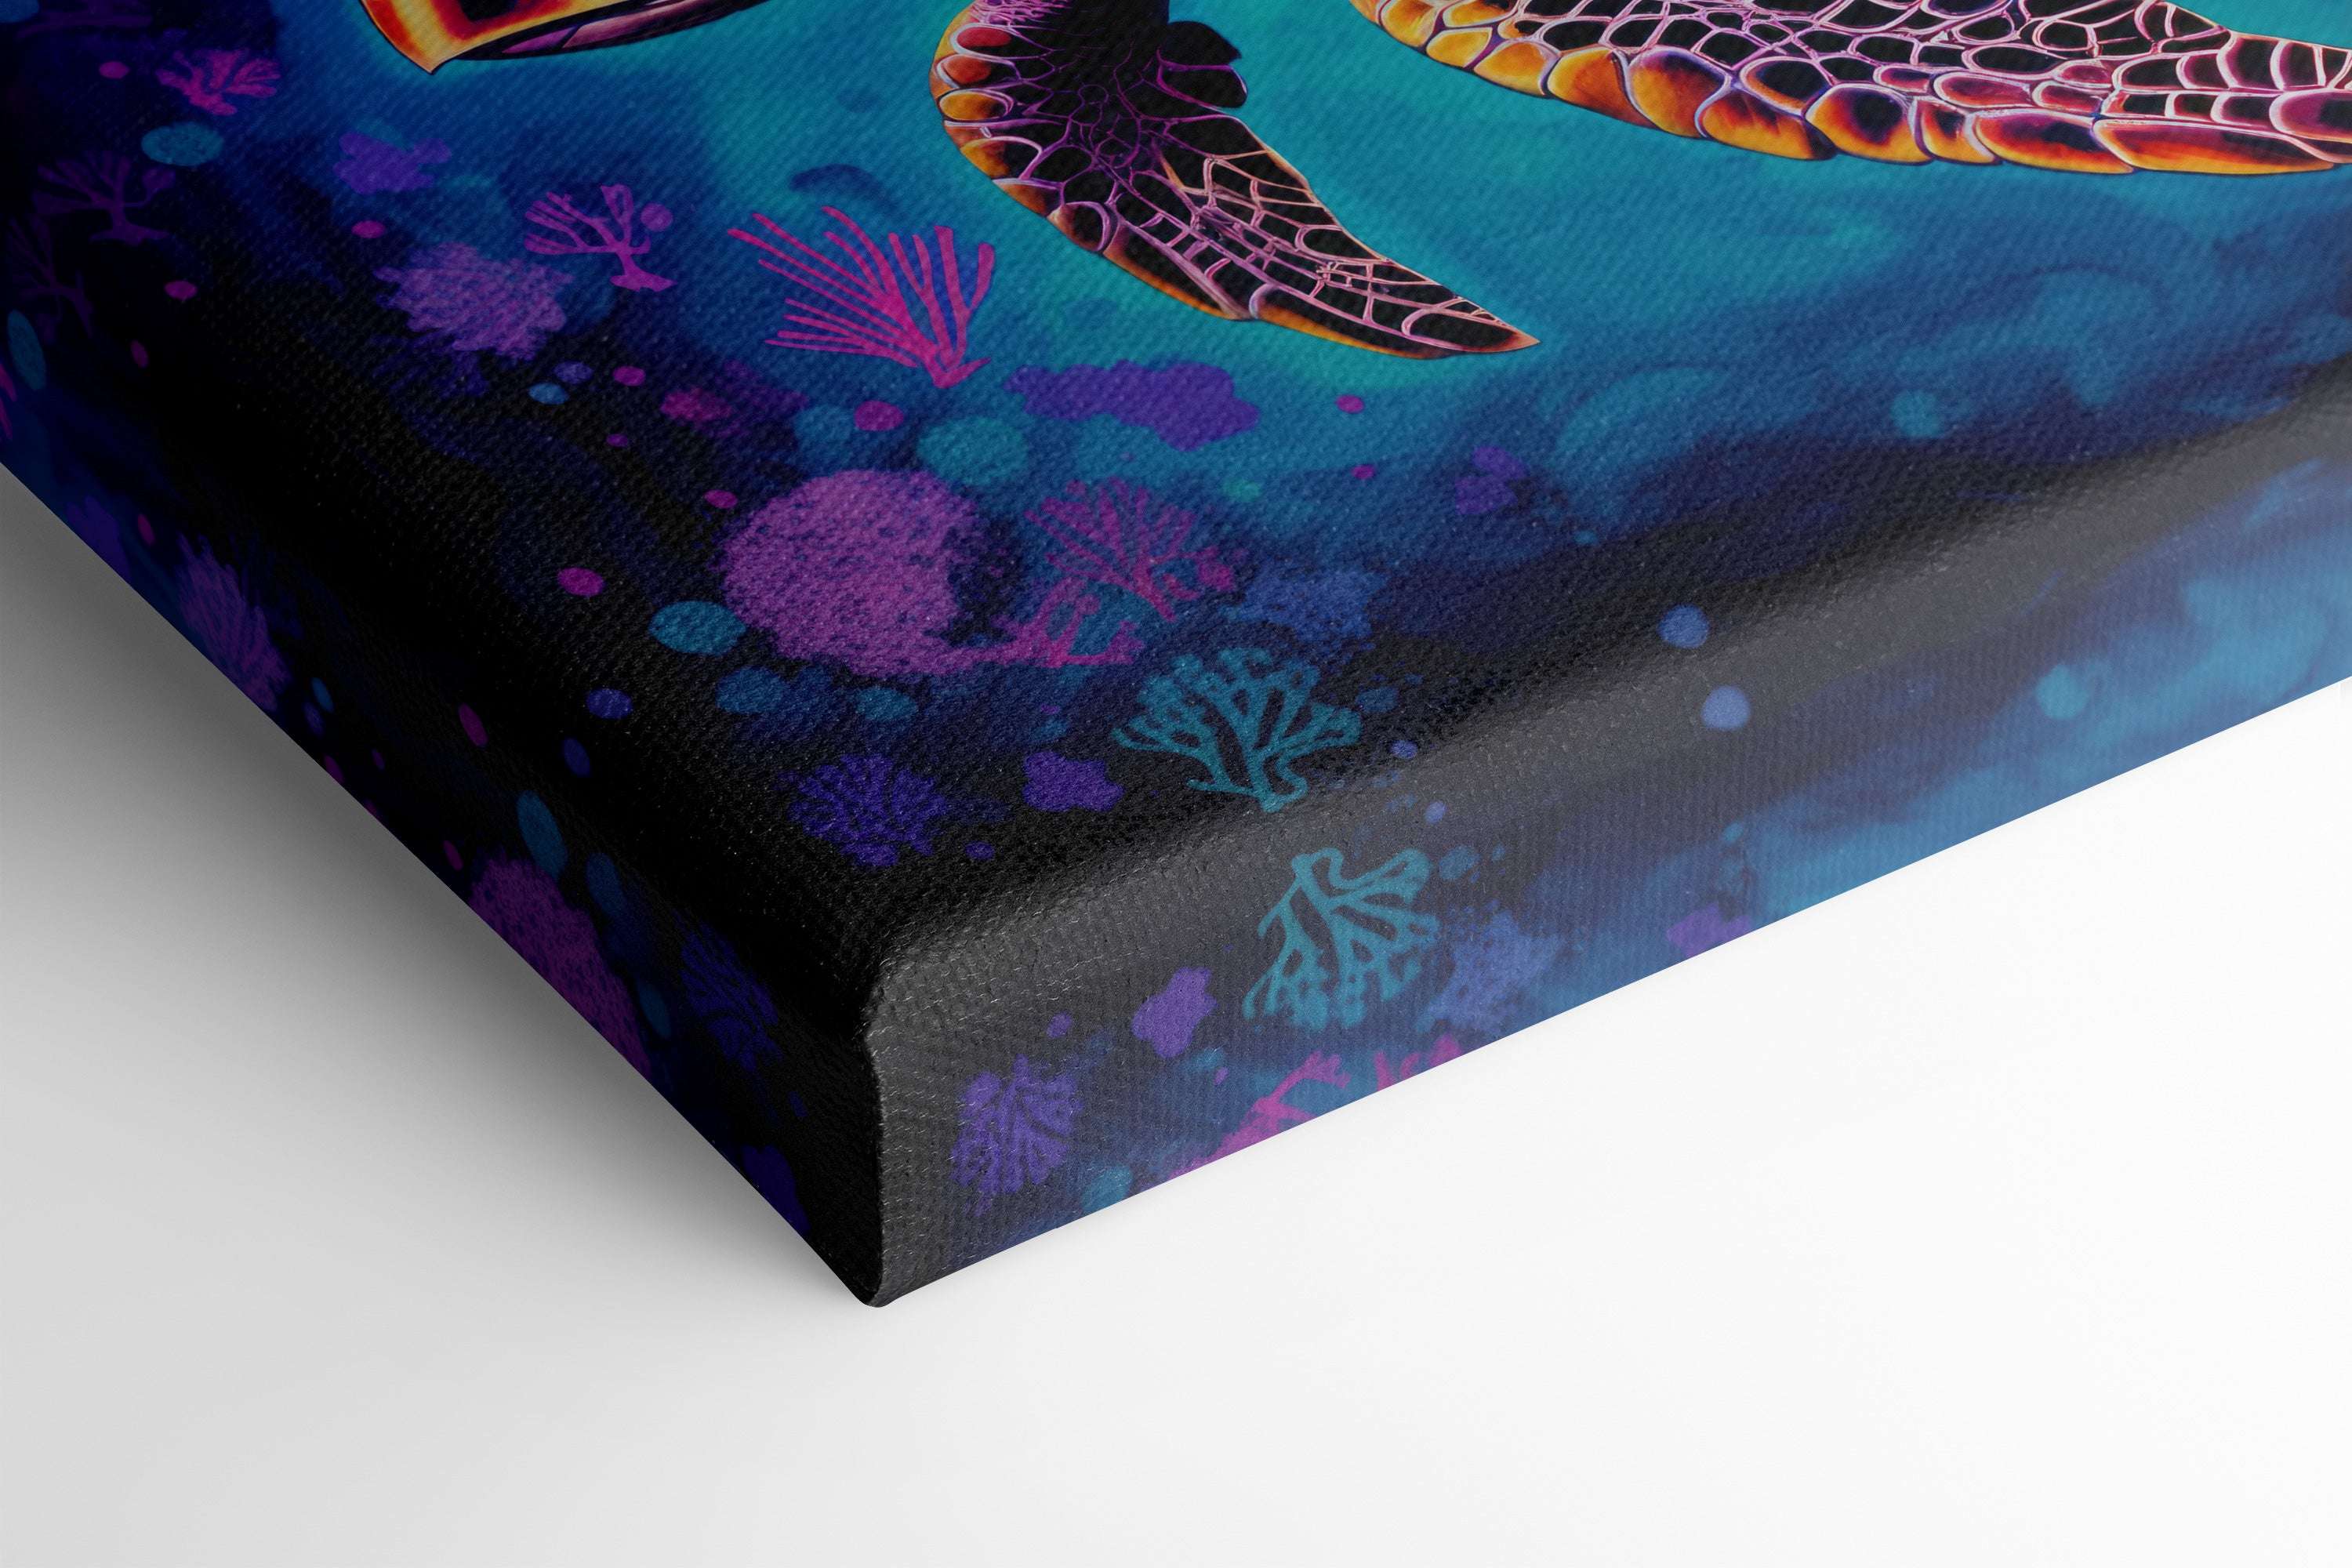 Neon Sea Turtle - Canvas Print - Artoholica Ready to Hang Canvas Print